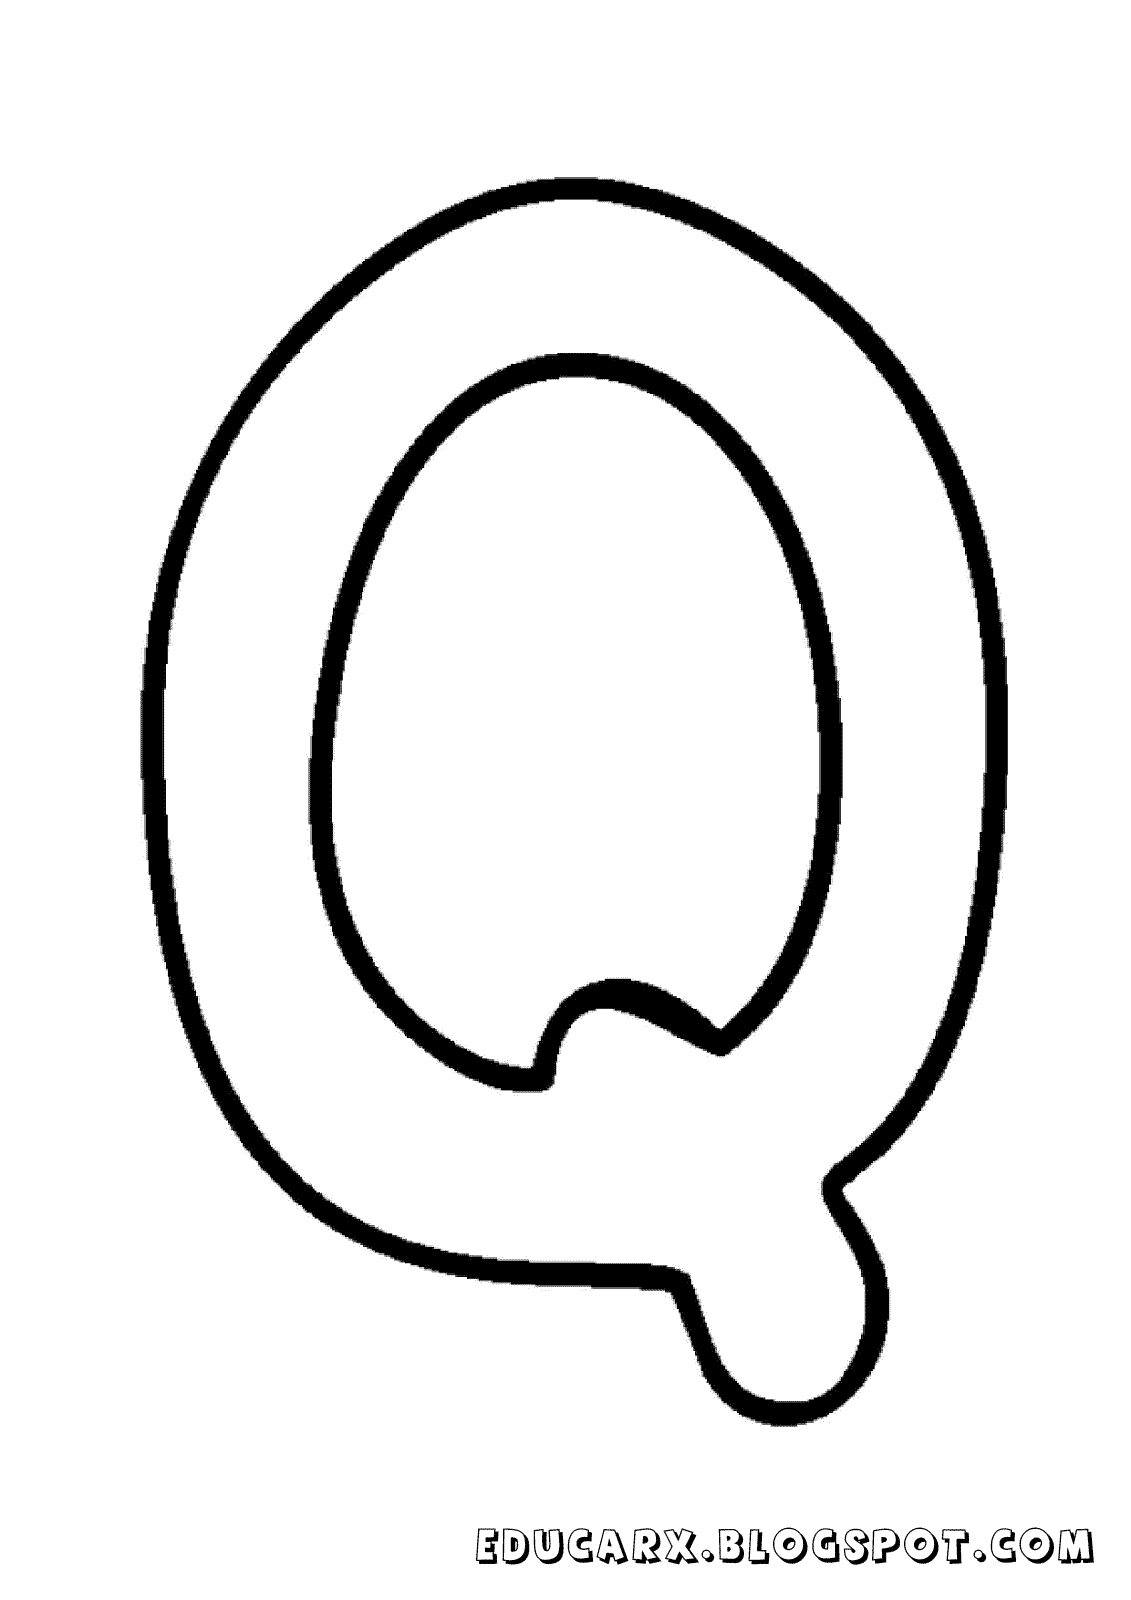 Molde da letra maiúscula Q